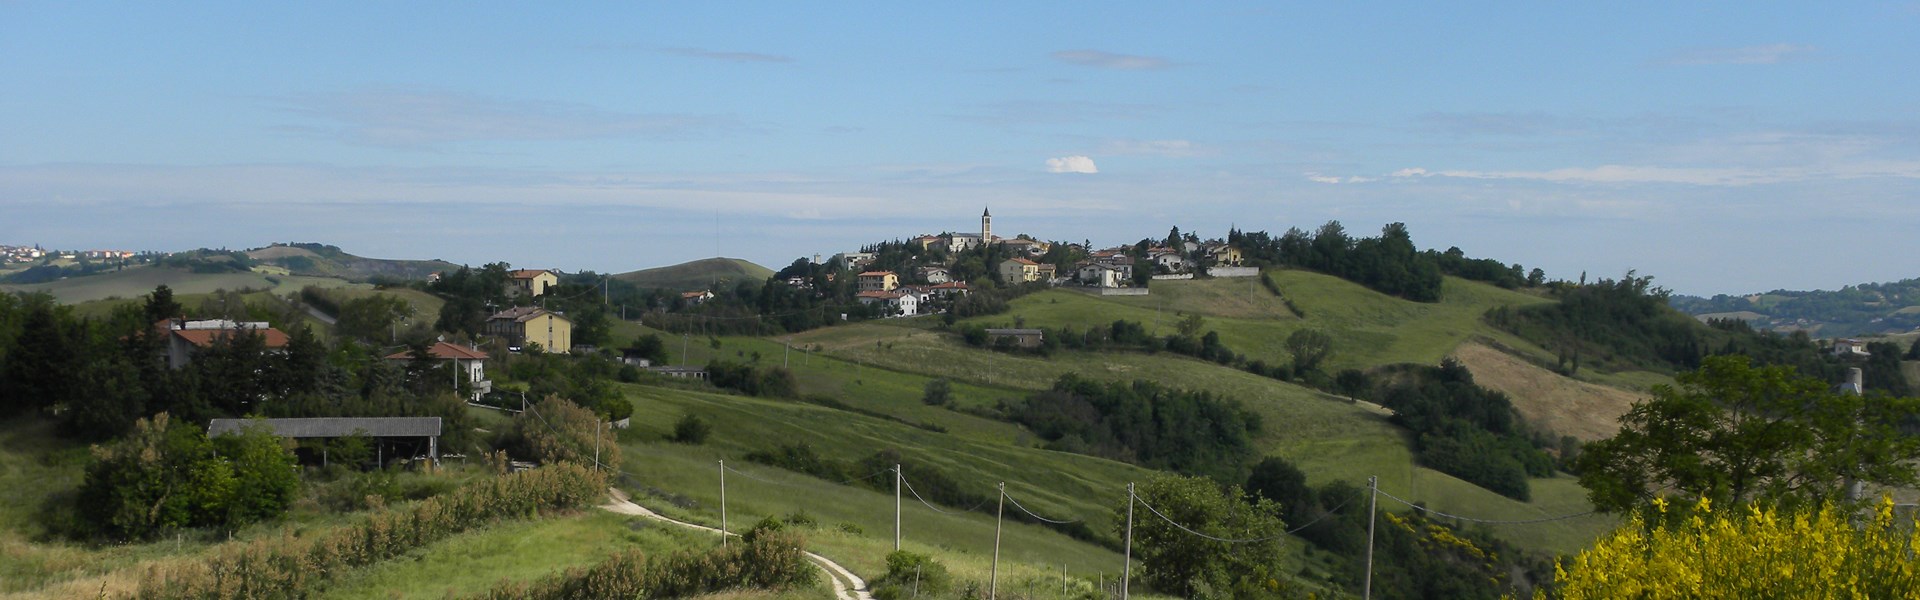 Montecalvo in Foglia - Panorama